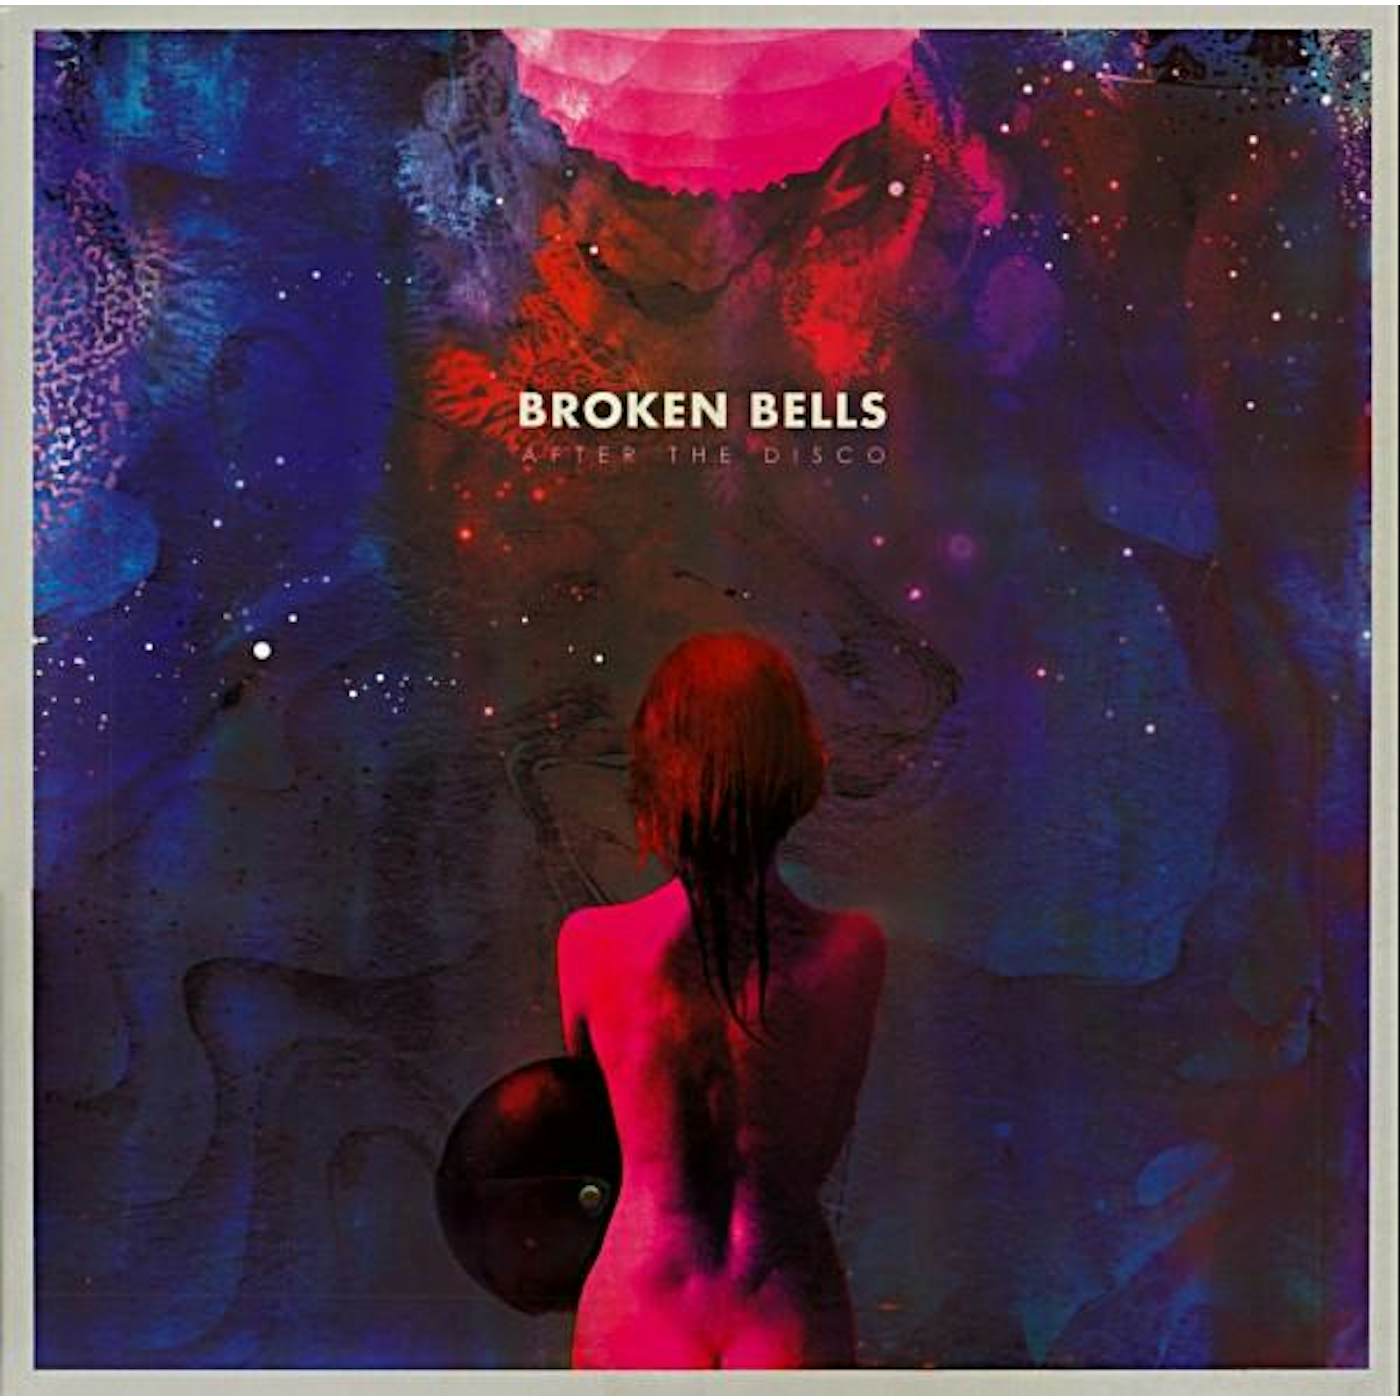 Broken Bells AFTER THE DISCO (180G/DL CARD/GATEFOLD) Vinyl Record